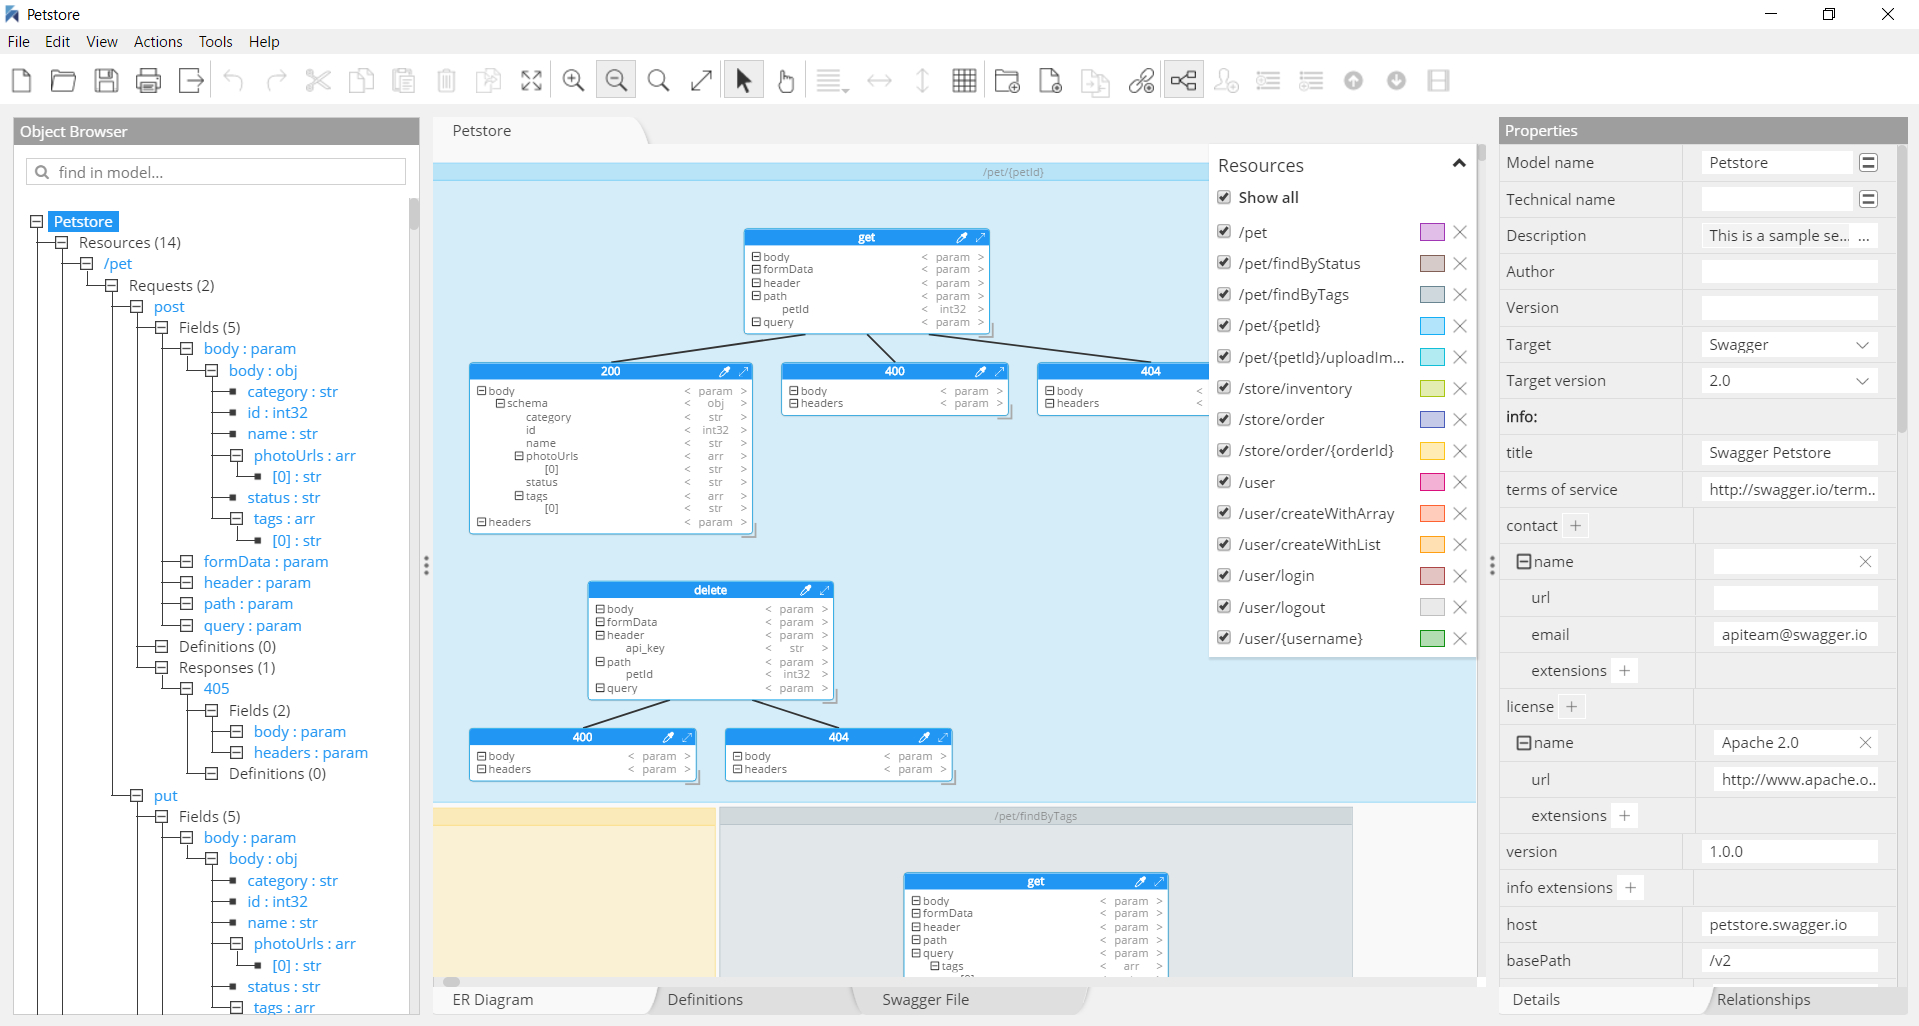 Nosql Databases Schema Design Software | Hackolade throughout Er Diagram Nosql